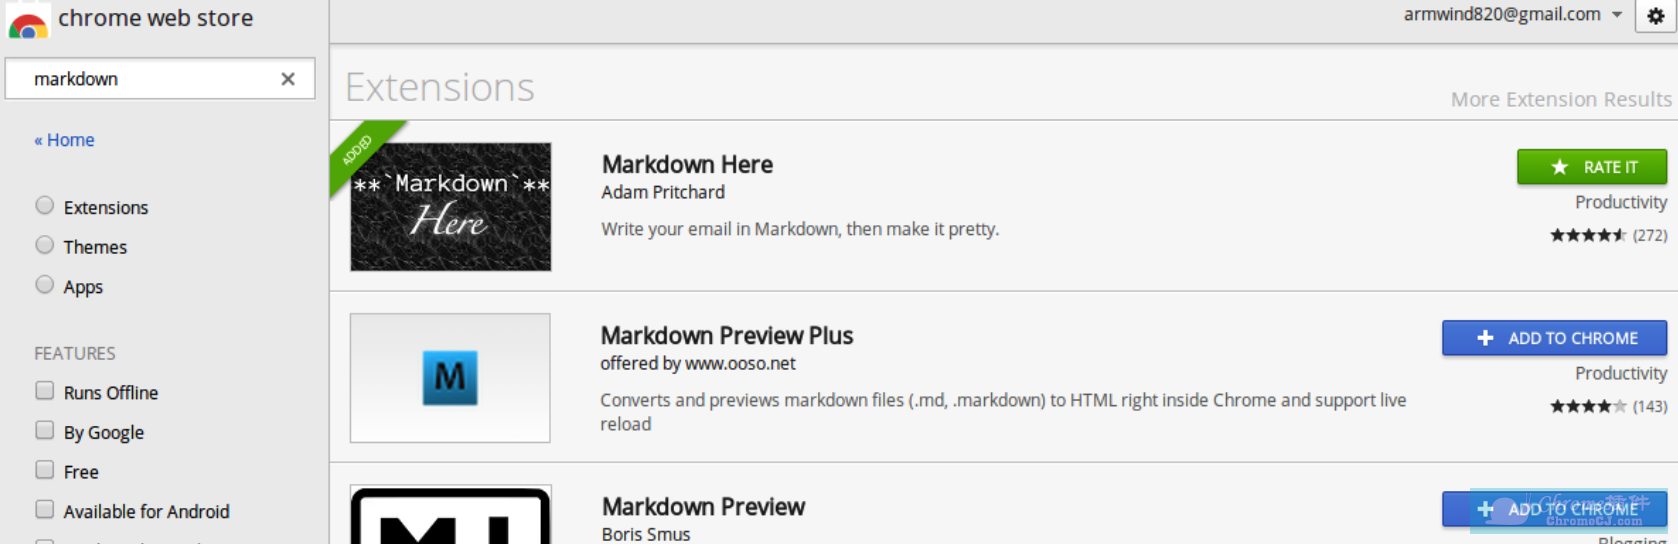 Markdown Here Chrome插件